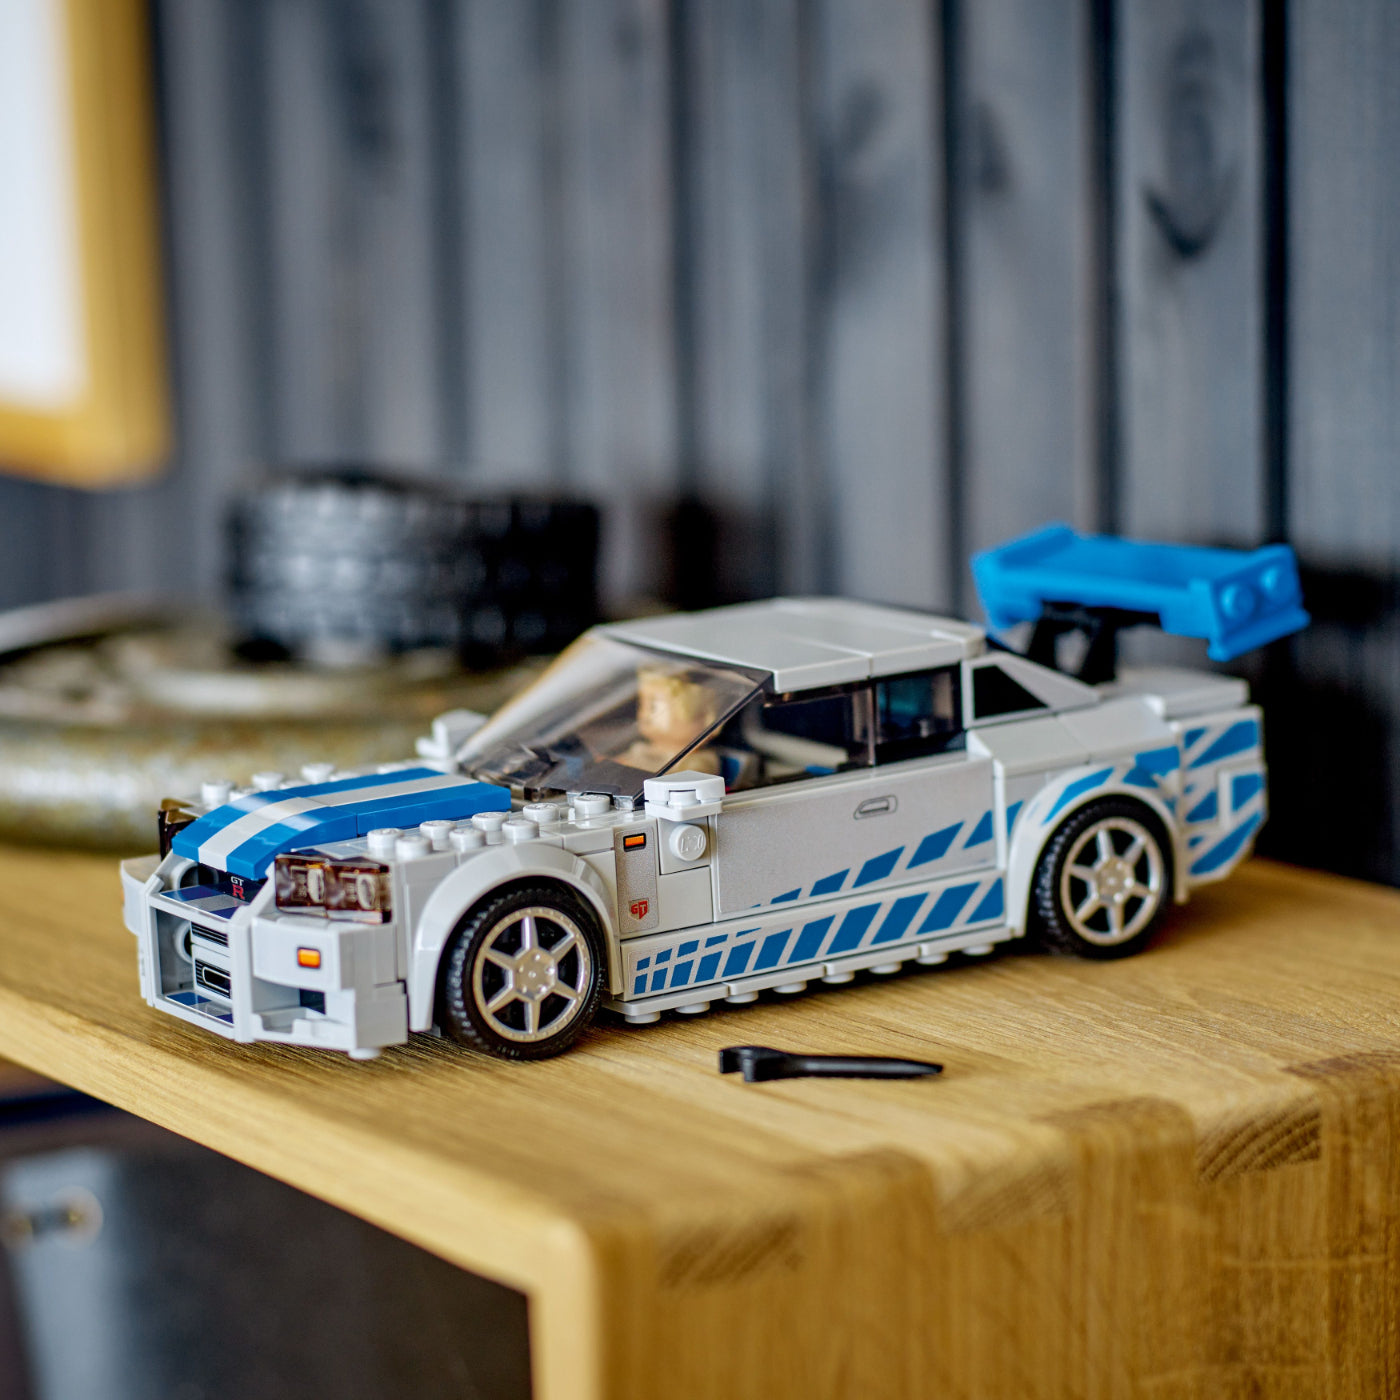 LEGO® Speed Champions Nissan Skyline GT-R (R34) de 2 Fast 2 Furious

 (76917)